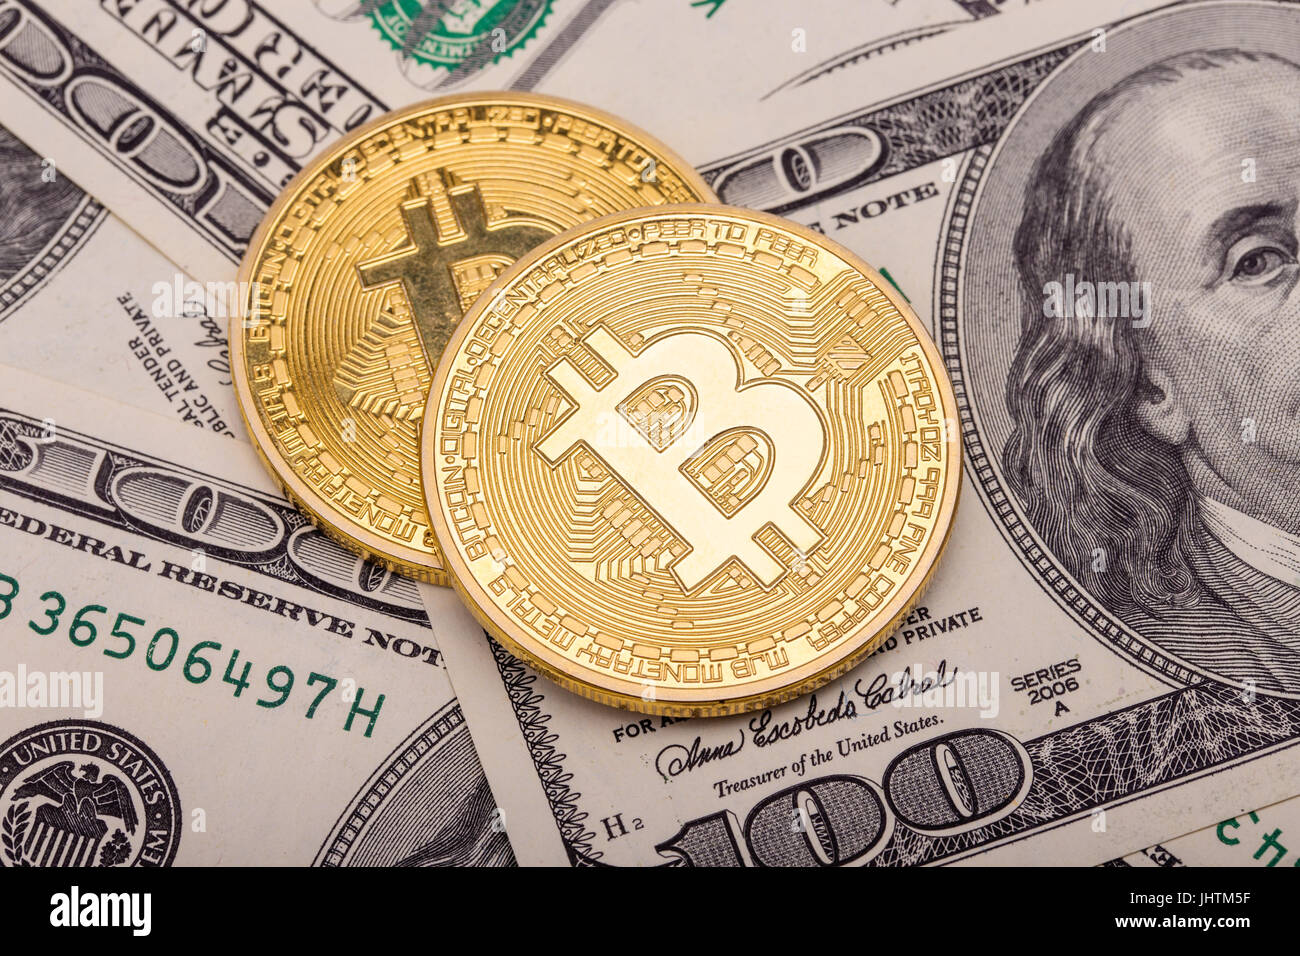 Two golden Bitcoins on US dollars. Electronic money exchange concept Stock Photo